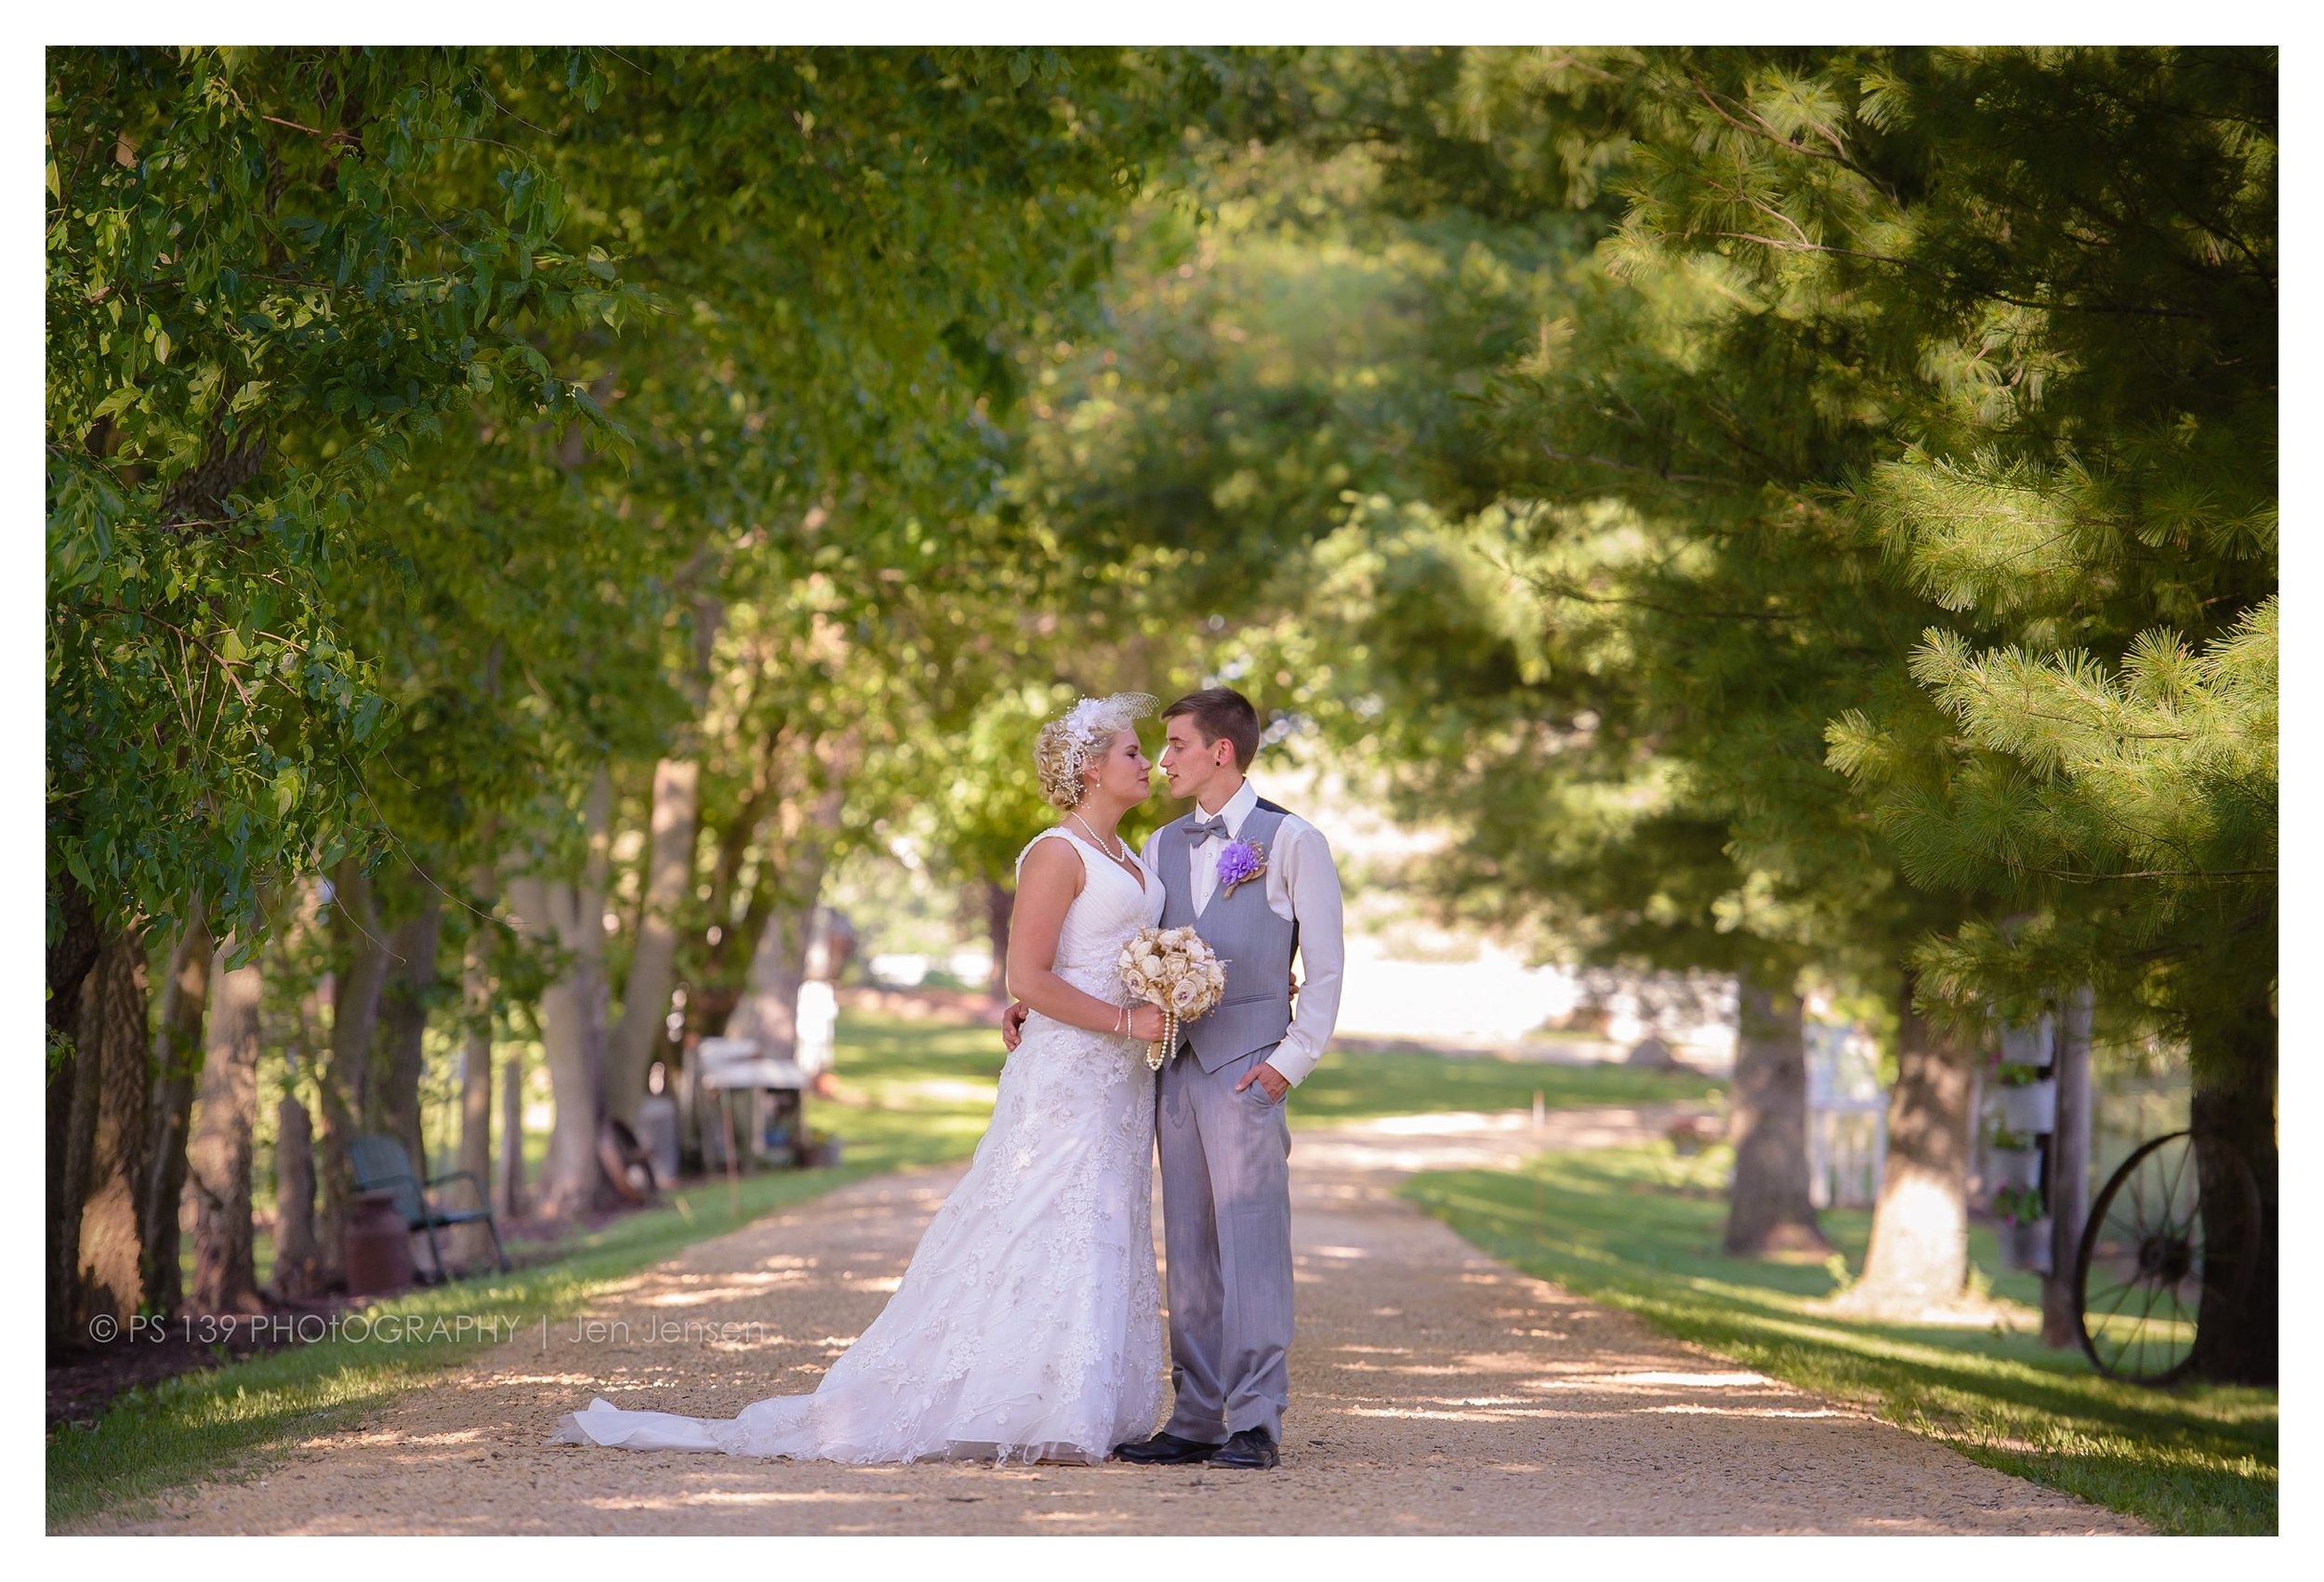 oregon Illinois oak lane farm wisconsin wedding photographer bayfield wi ps 139 photography jen jensen_0231.jpg